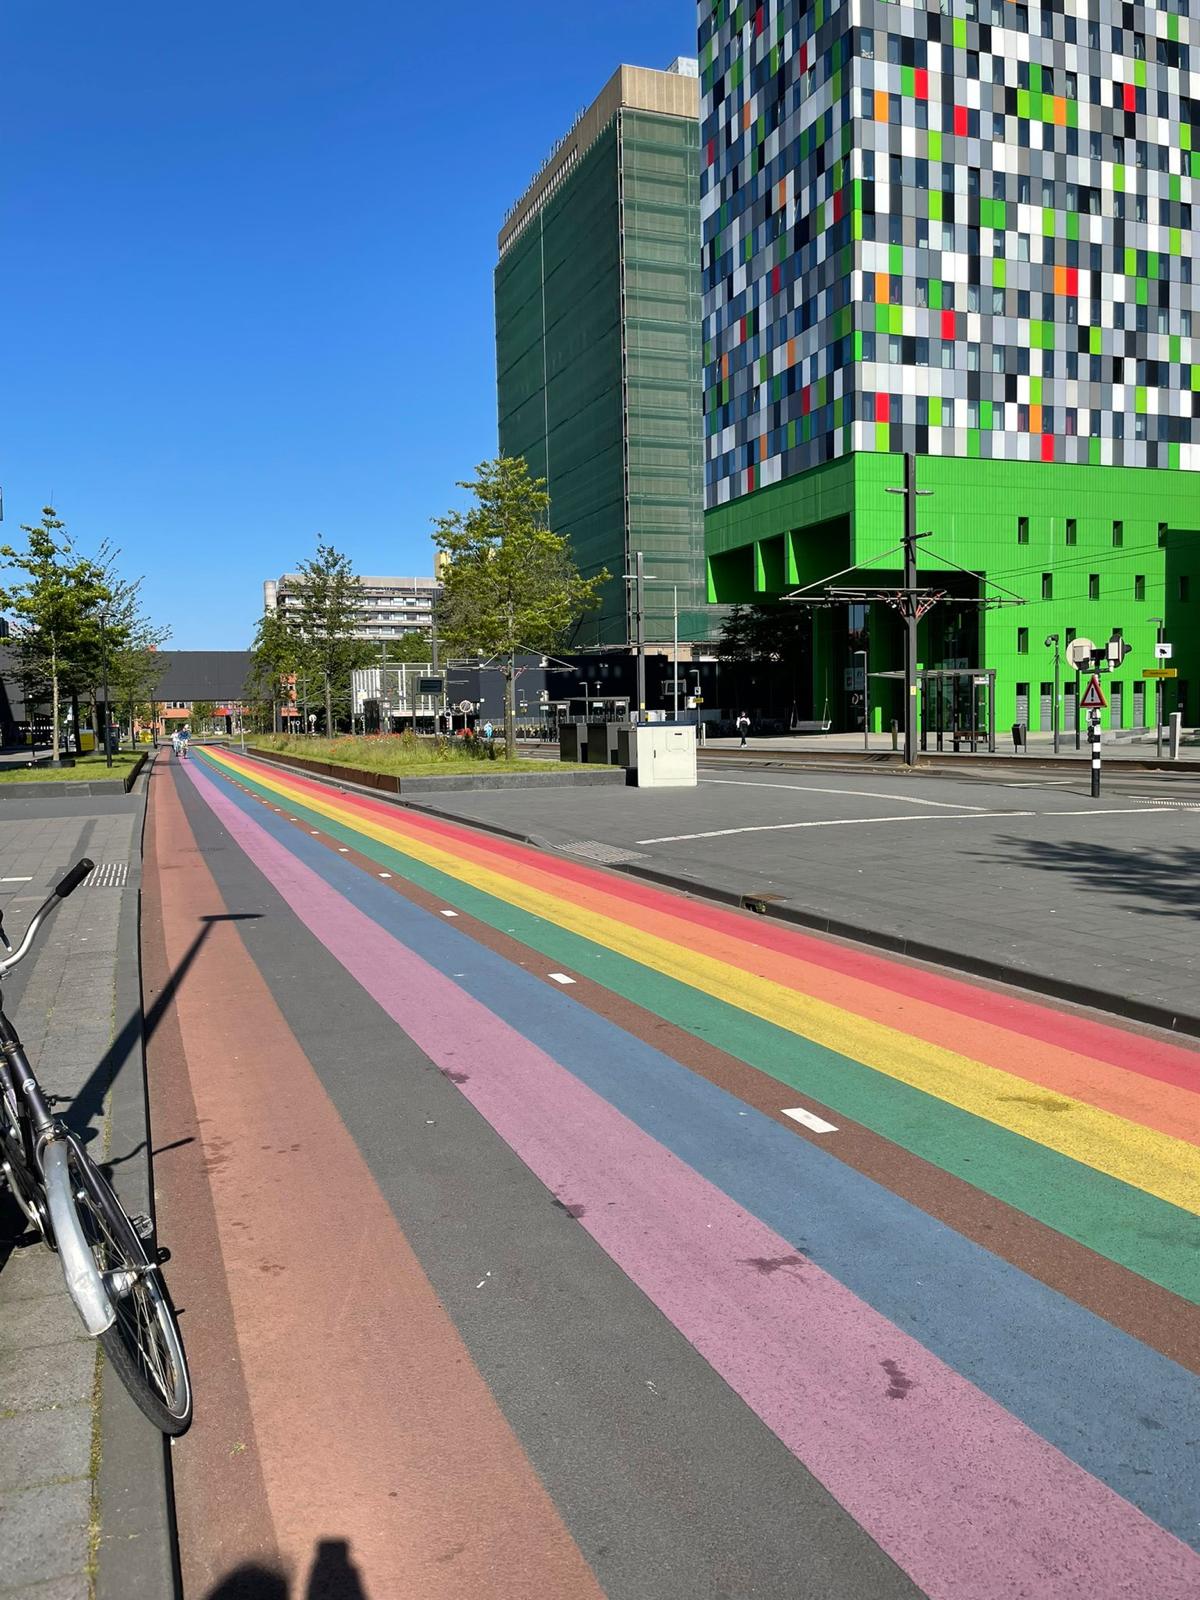 Rainbow coloured bike lane on campus